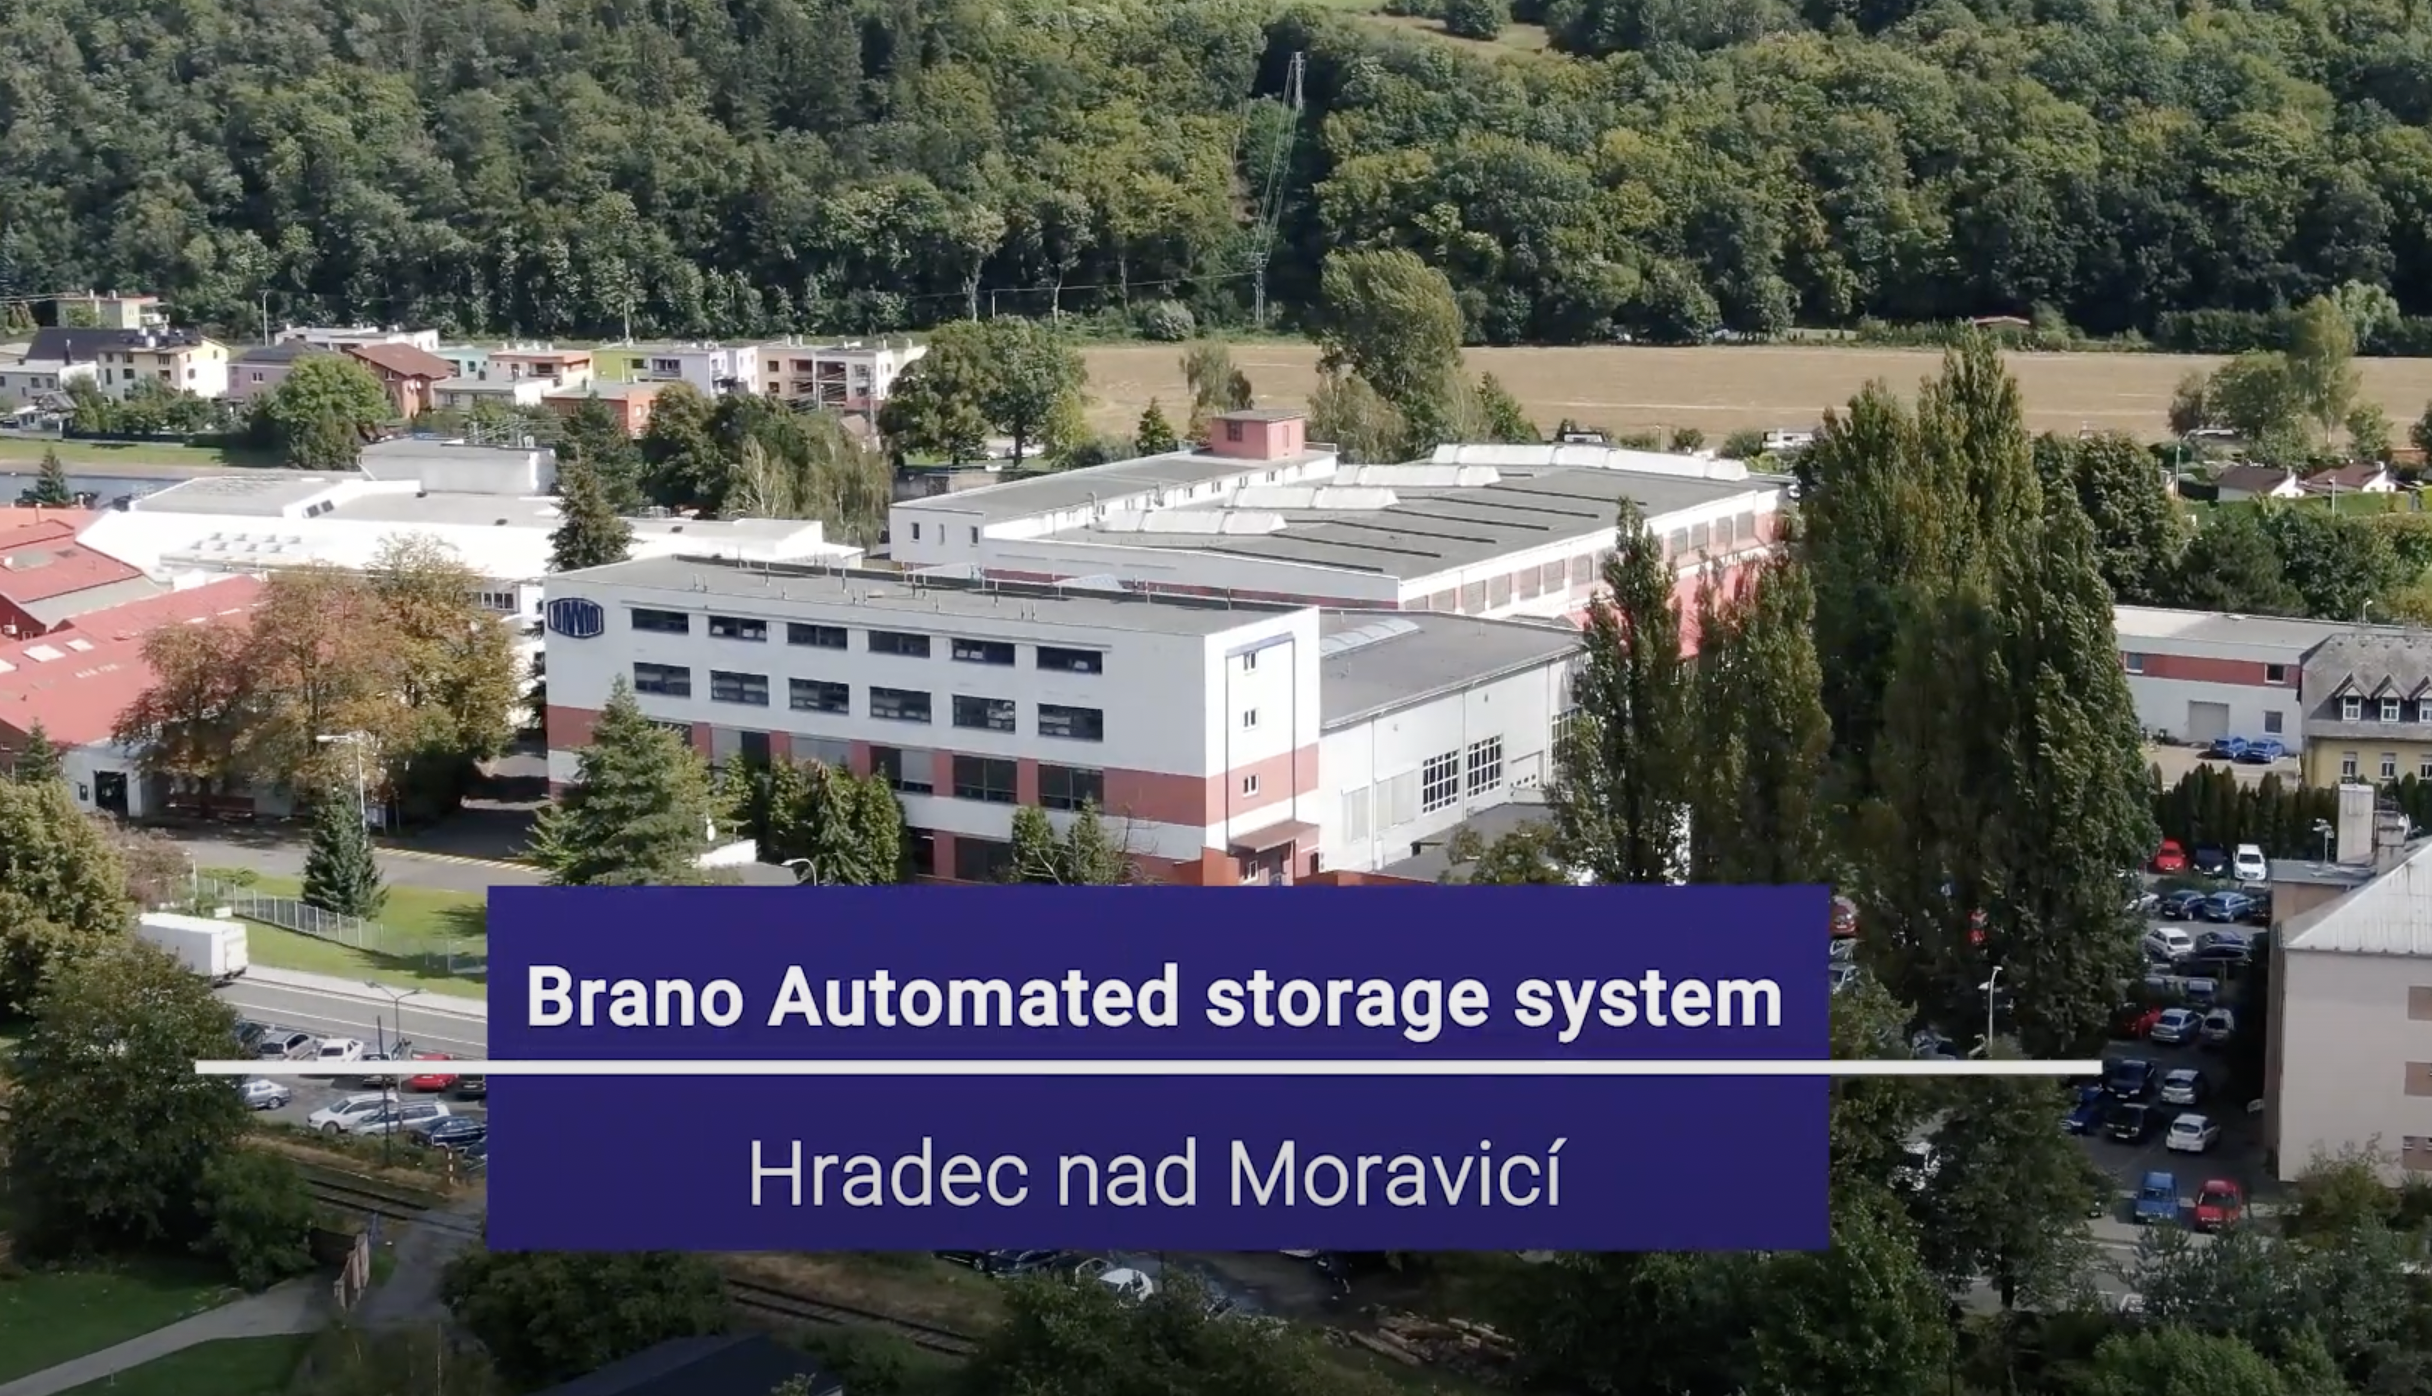 BRANO automated storage system